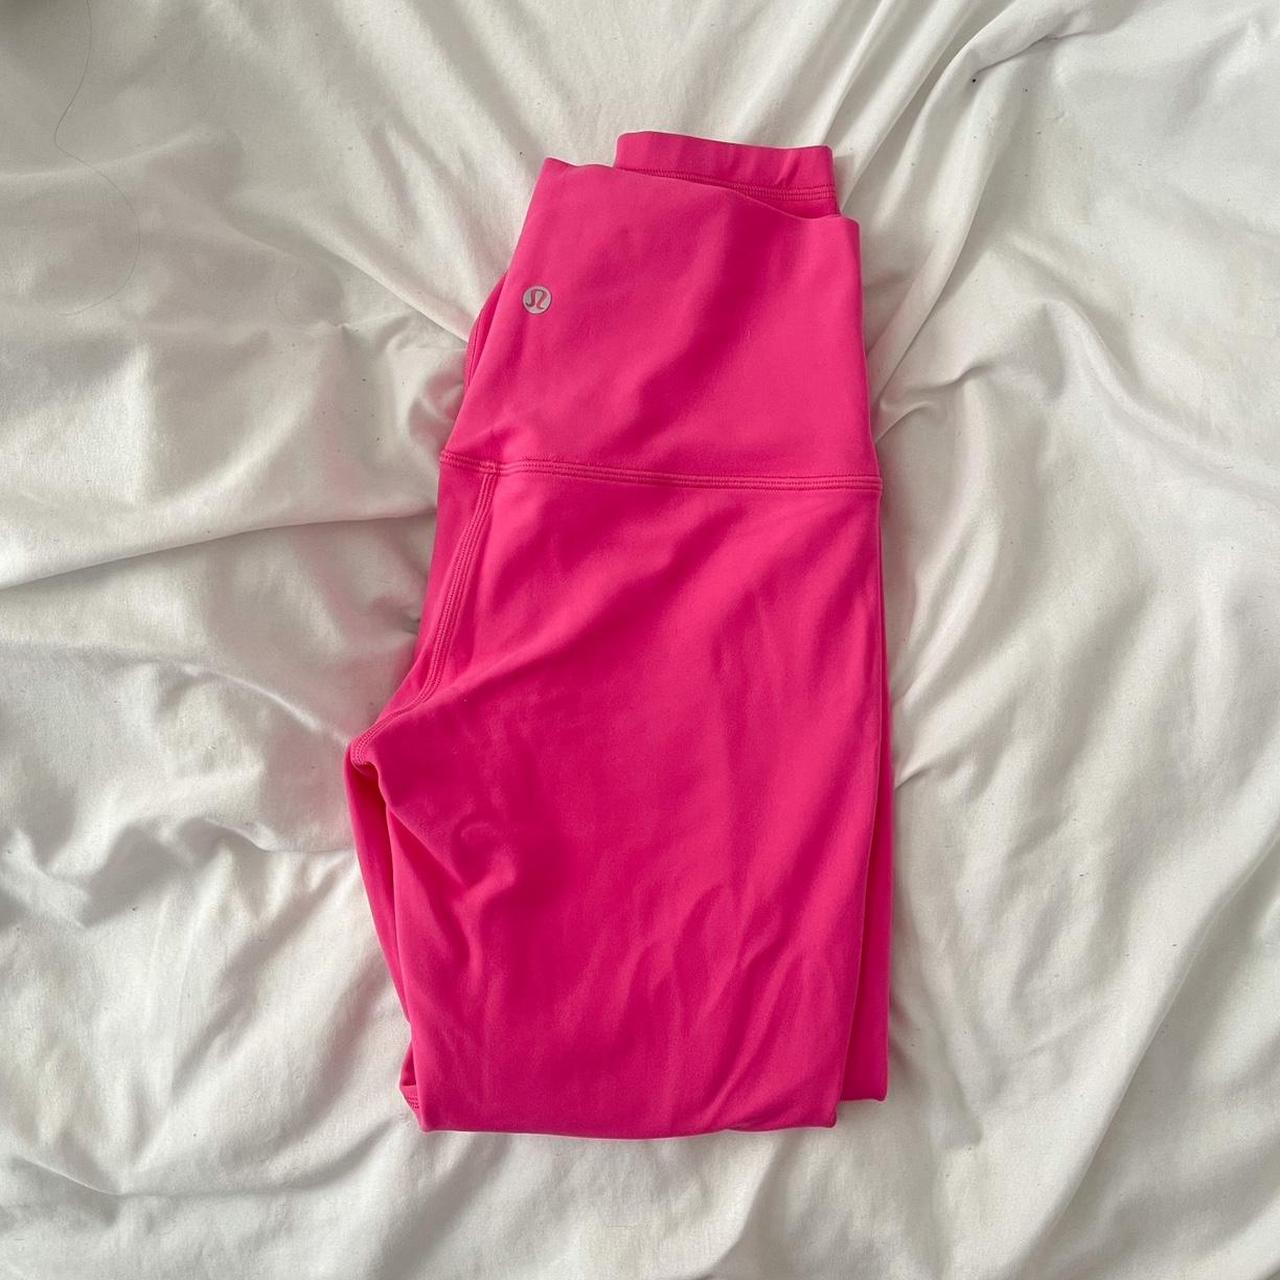 Lily lemon Sonic Pink High-Rise Leggings worn like - Depop